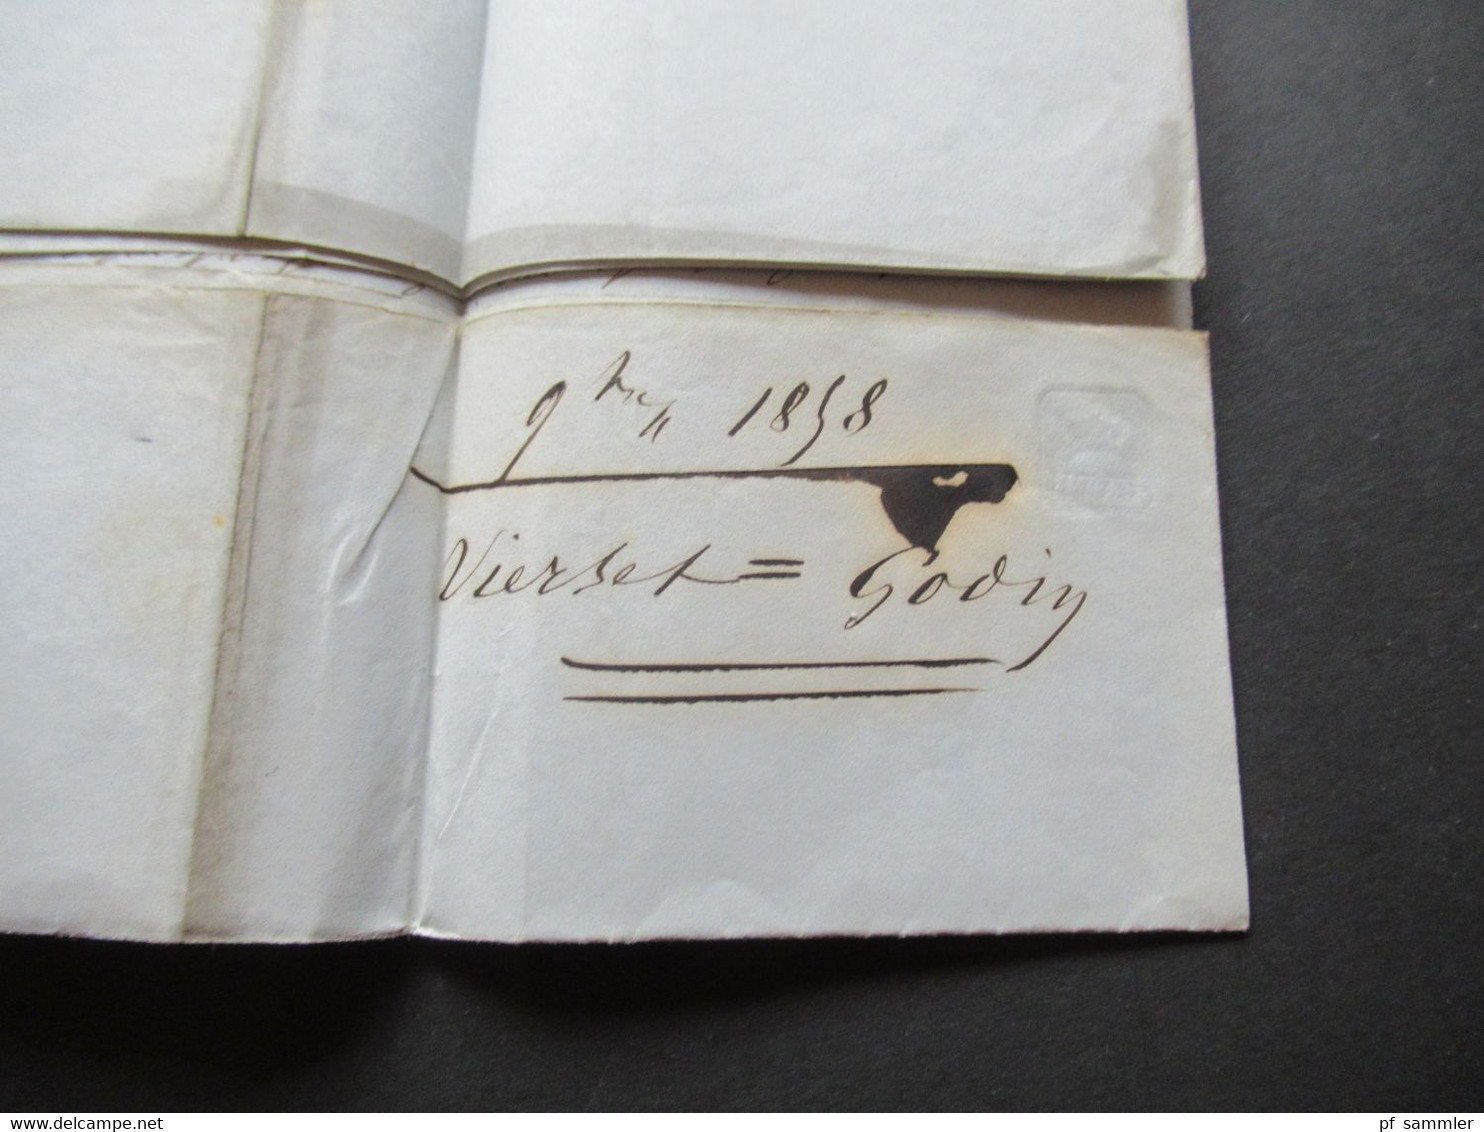 Belgien 1858 Auslands Faltbrief mit Inhalt Huy - Beaume K2 Belg.A Erquelines A und Taxstempel / Architecte Vierset Godin